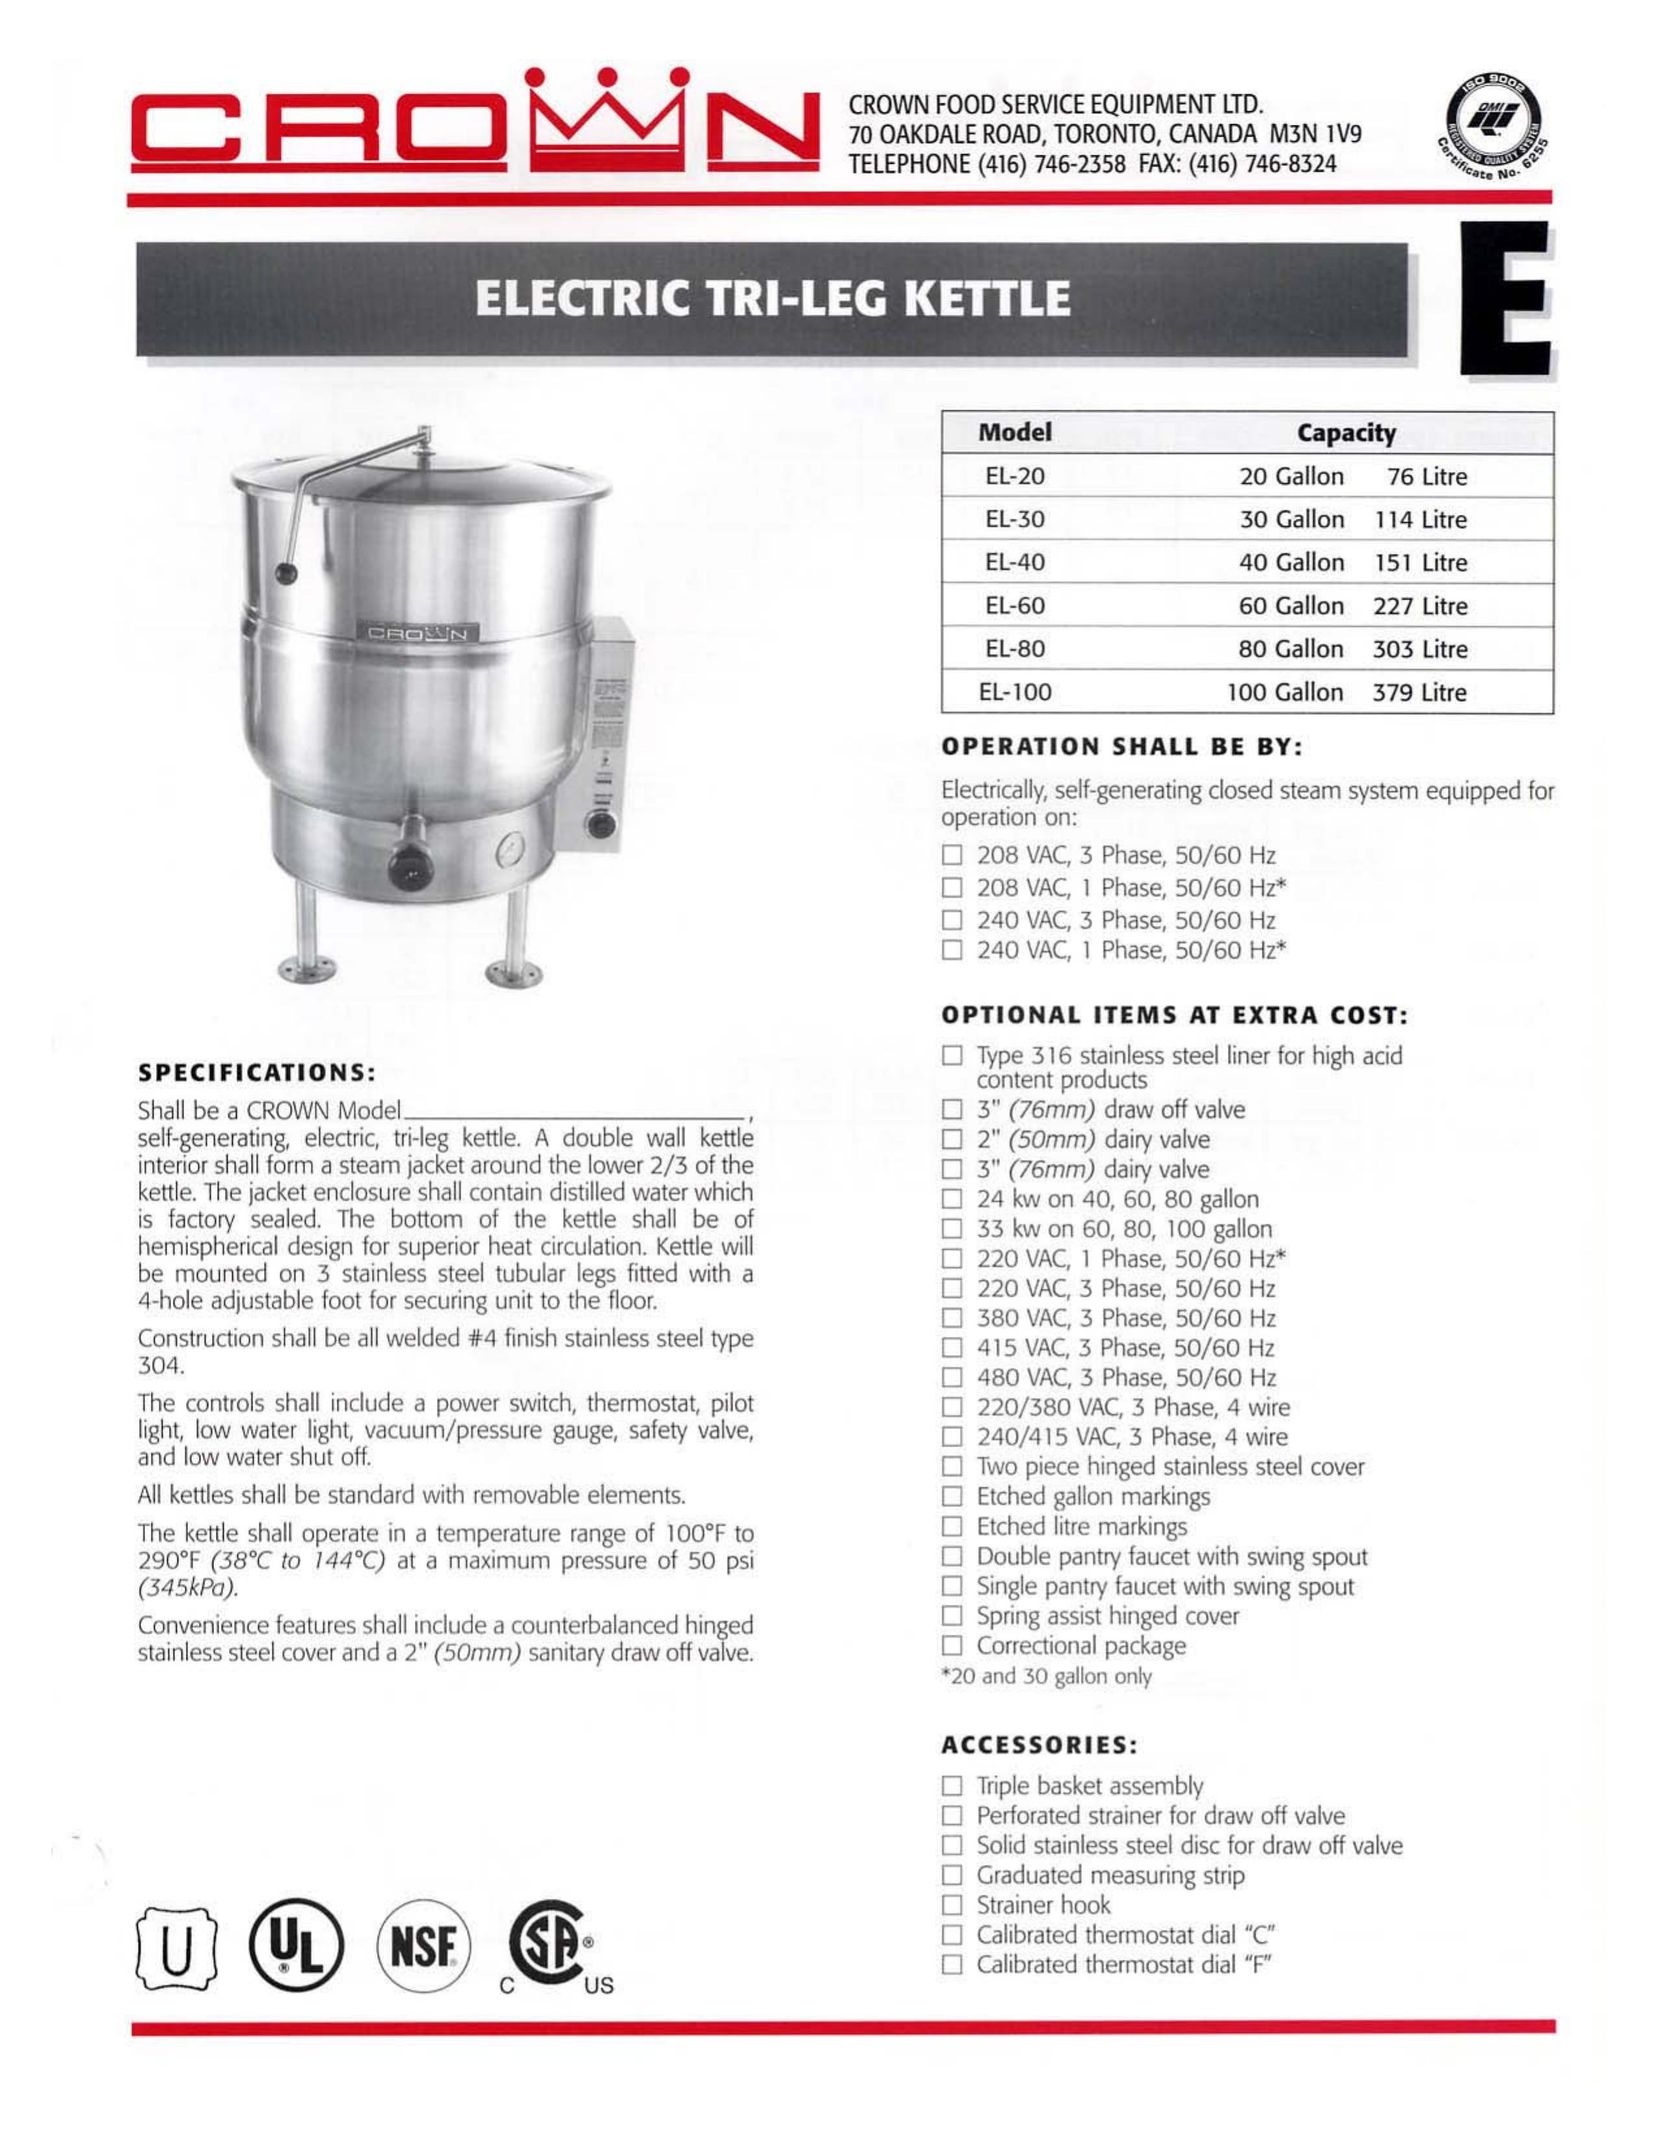 Crown Equipment EL-20 Hot Beverage Maker User Manual